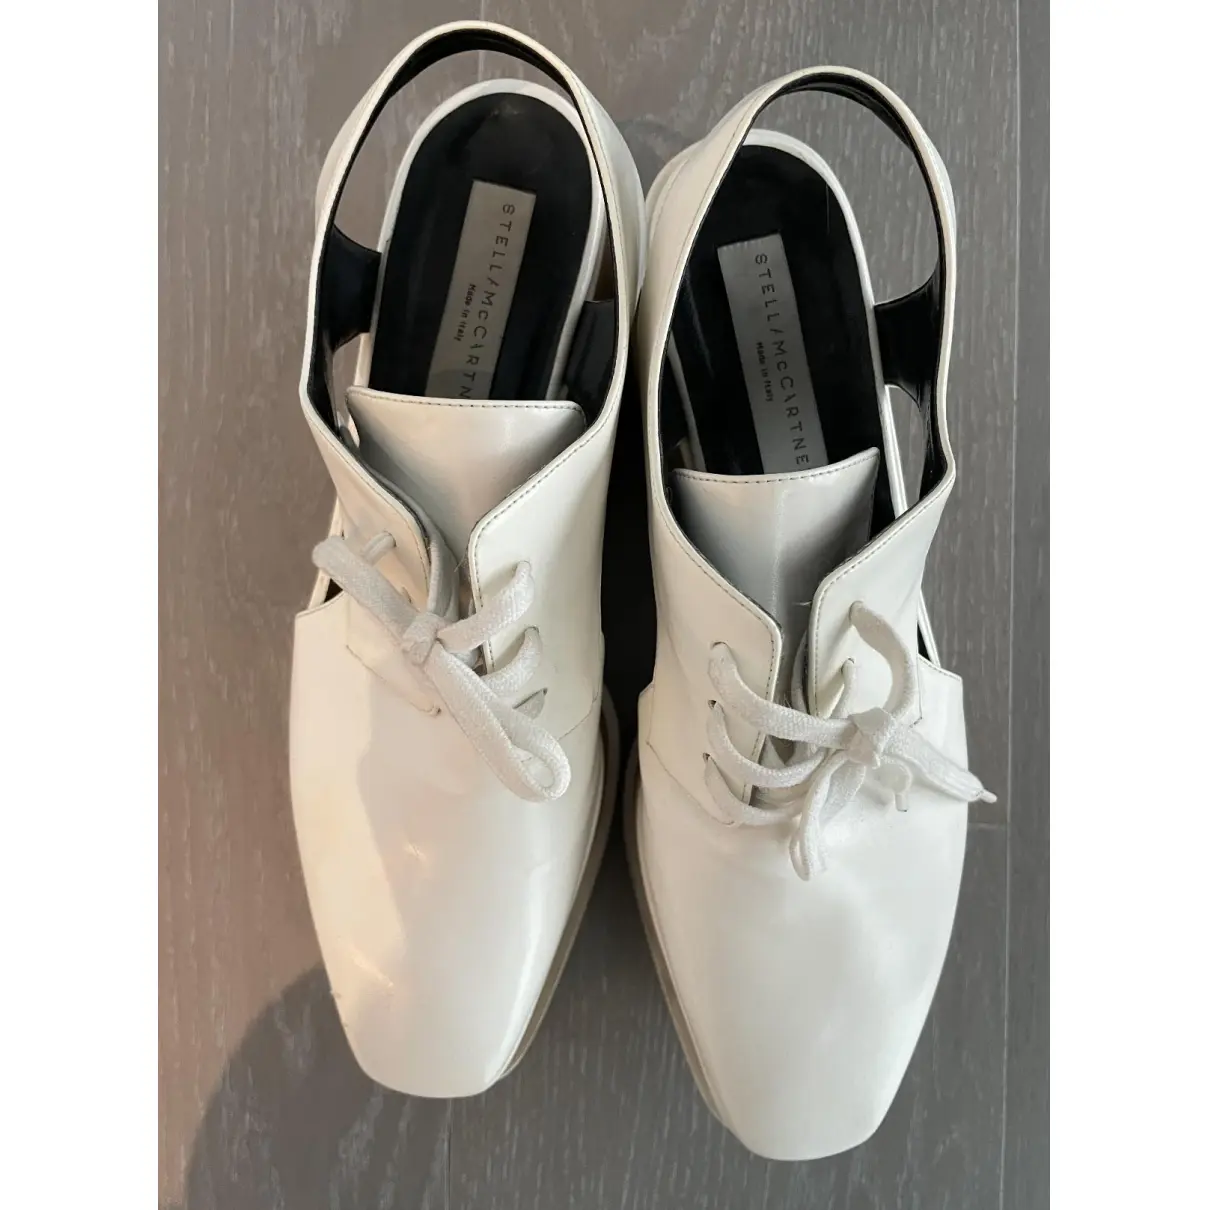 Buy Stella McCartney Leather heels online